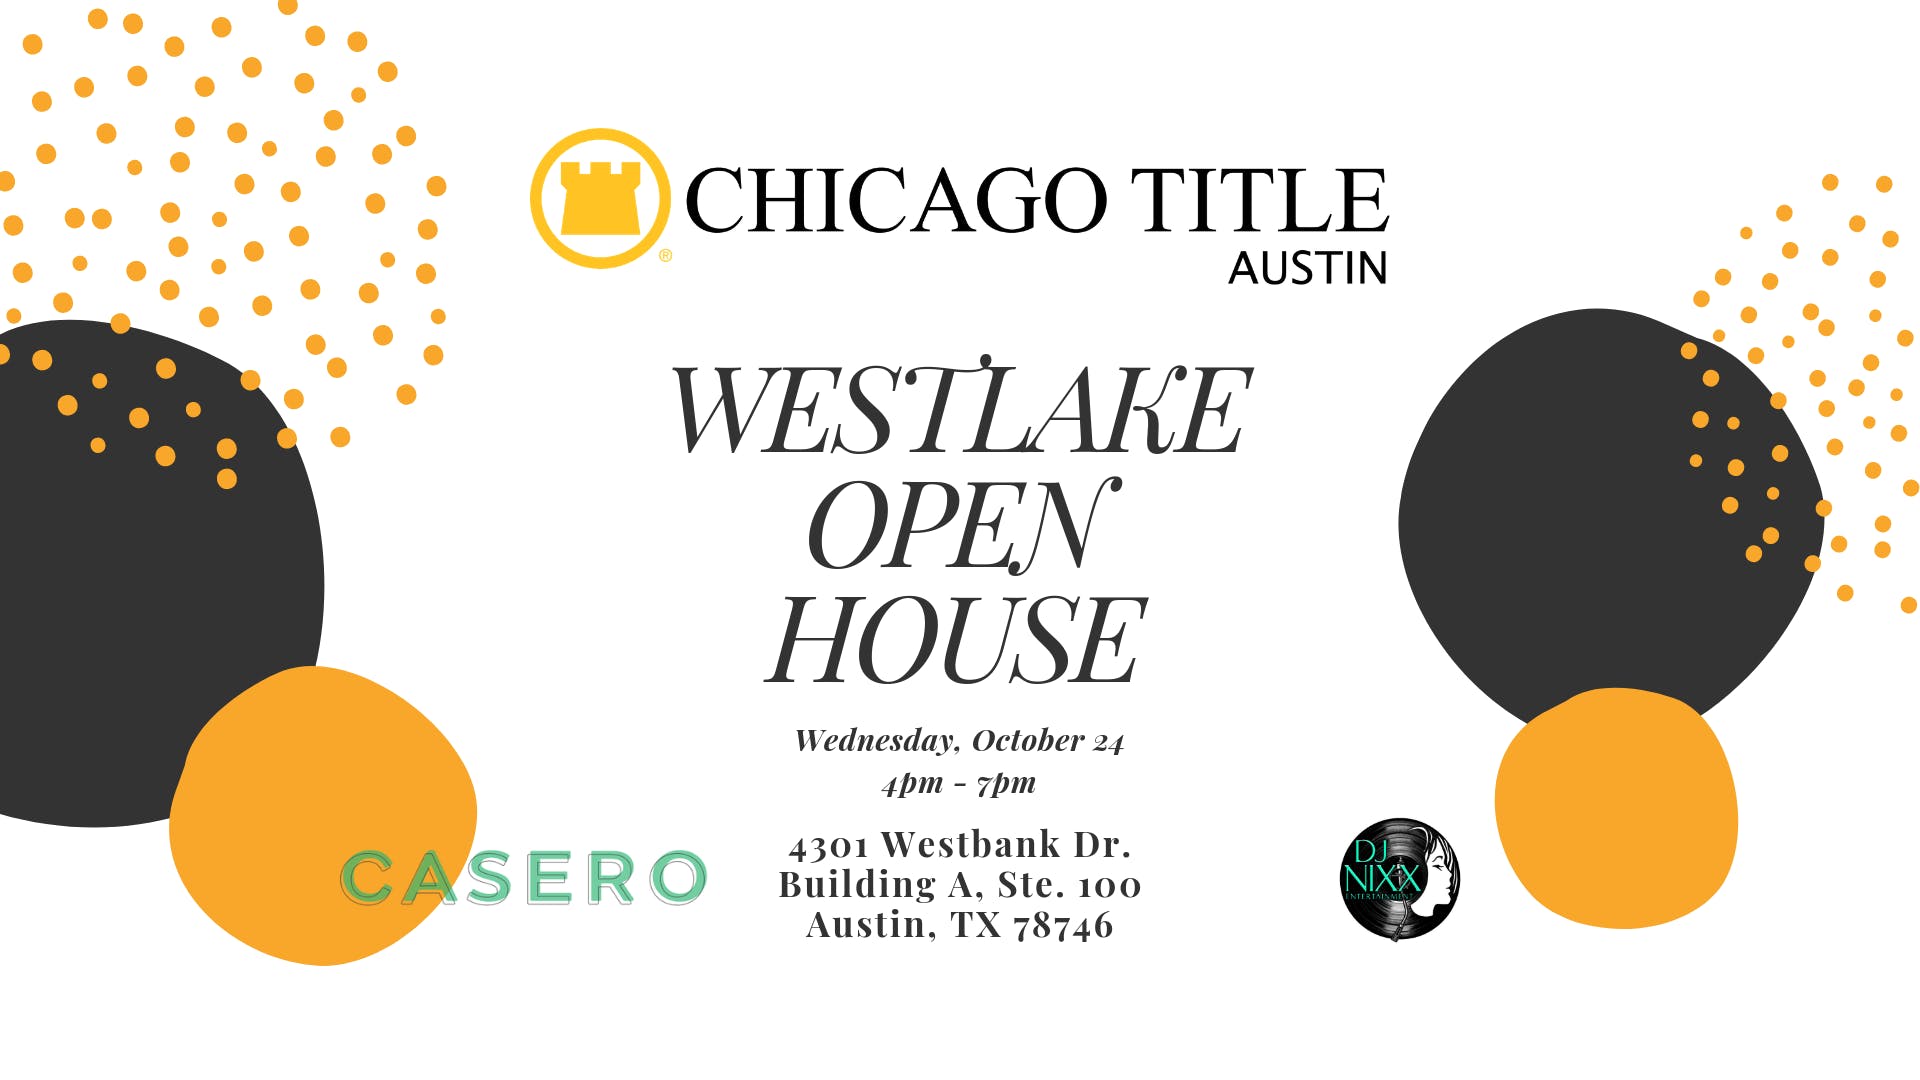 Chicago Title of Texas Logo - Chicago Title Austin - WESTLAKE Open House - 24 OCT 2018